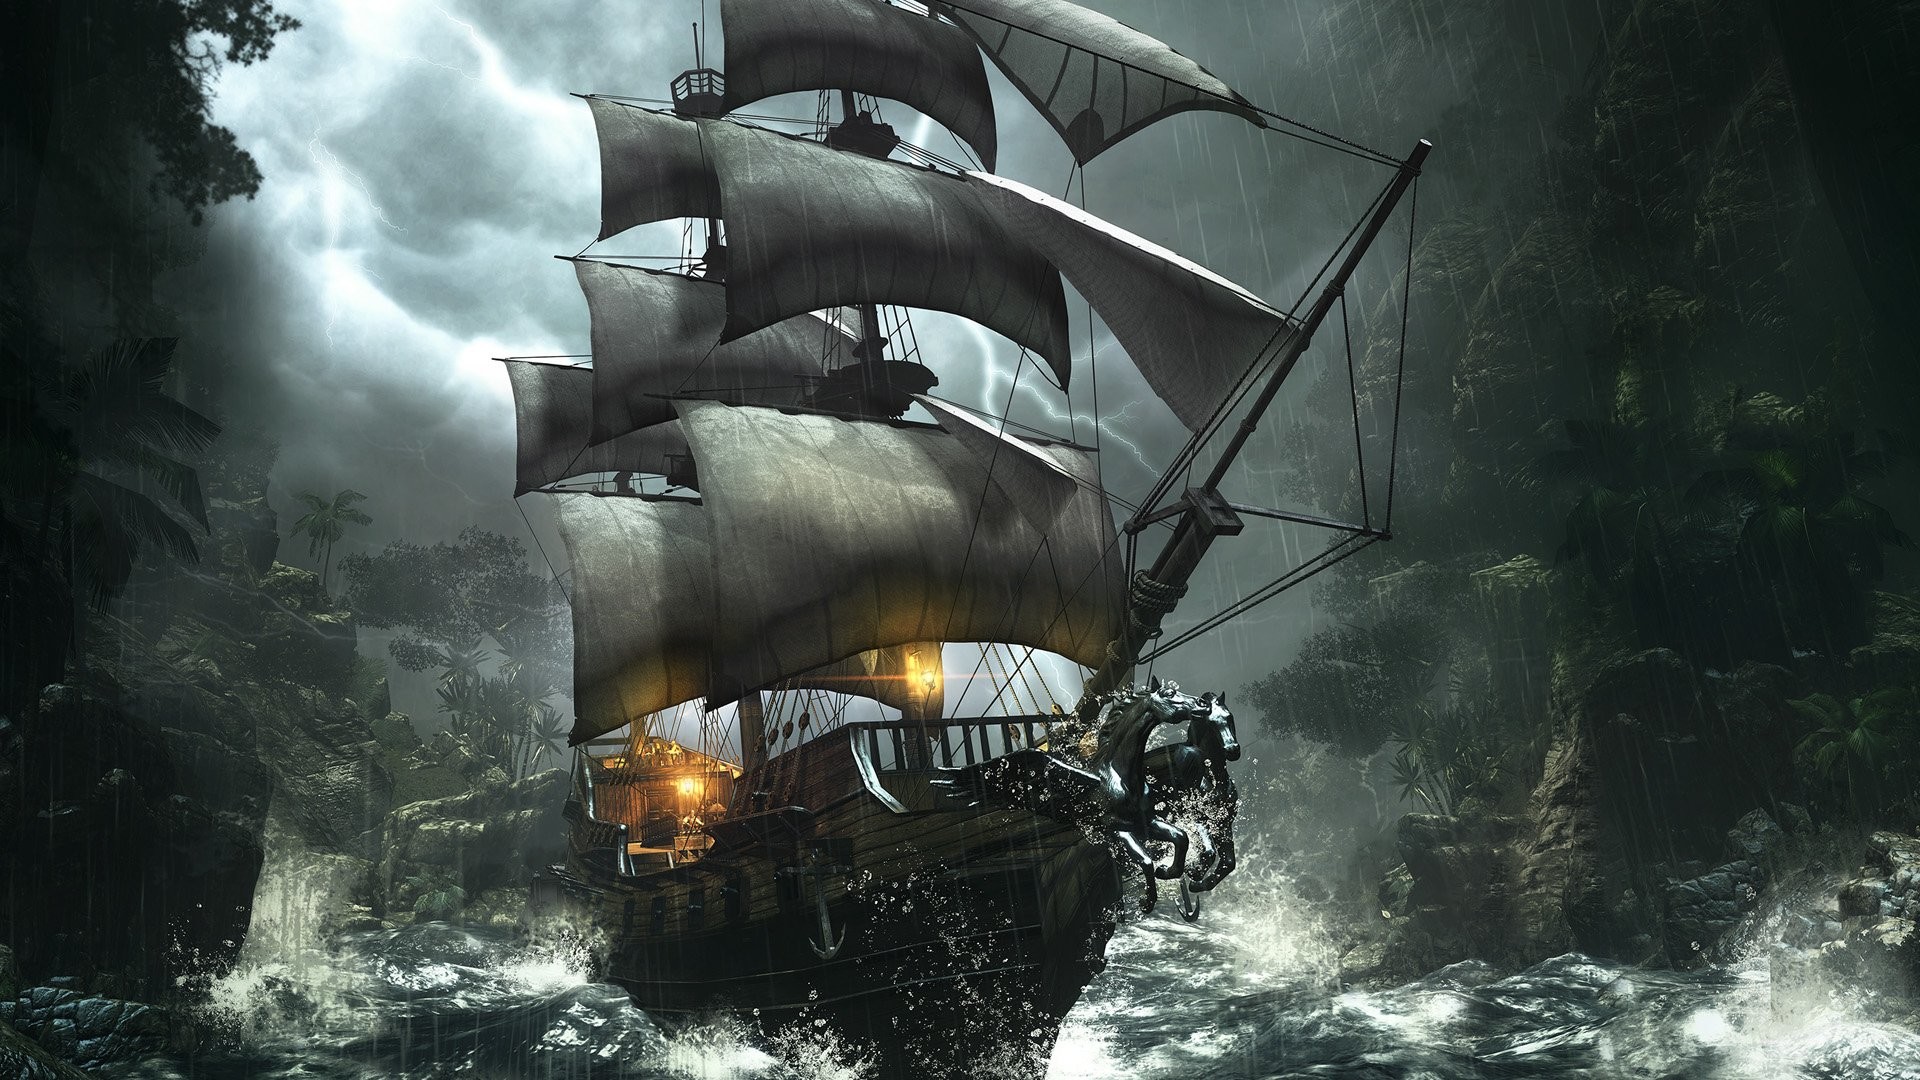 Pirate Ship Wallpaper High Definition - Pirate Ship Wallpaper 4k - HD Wallpaper 